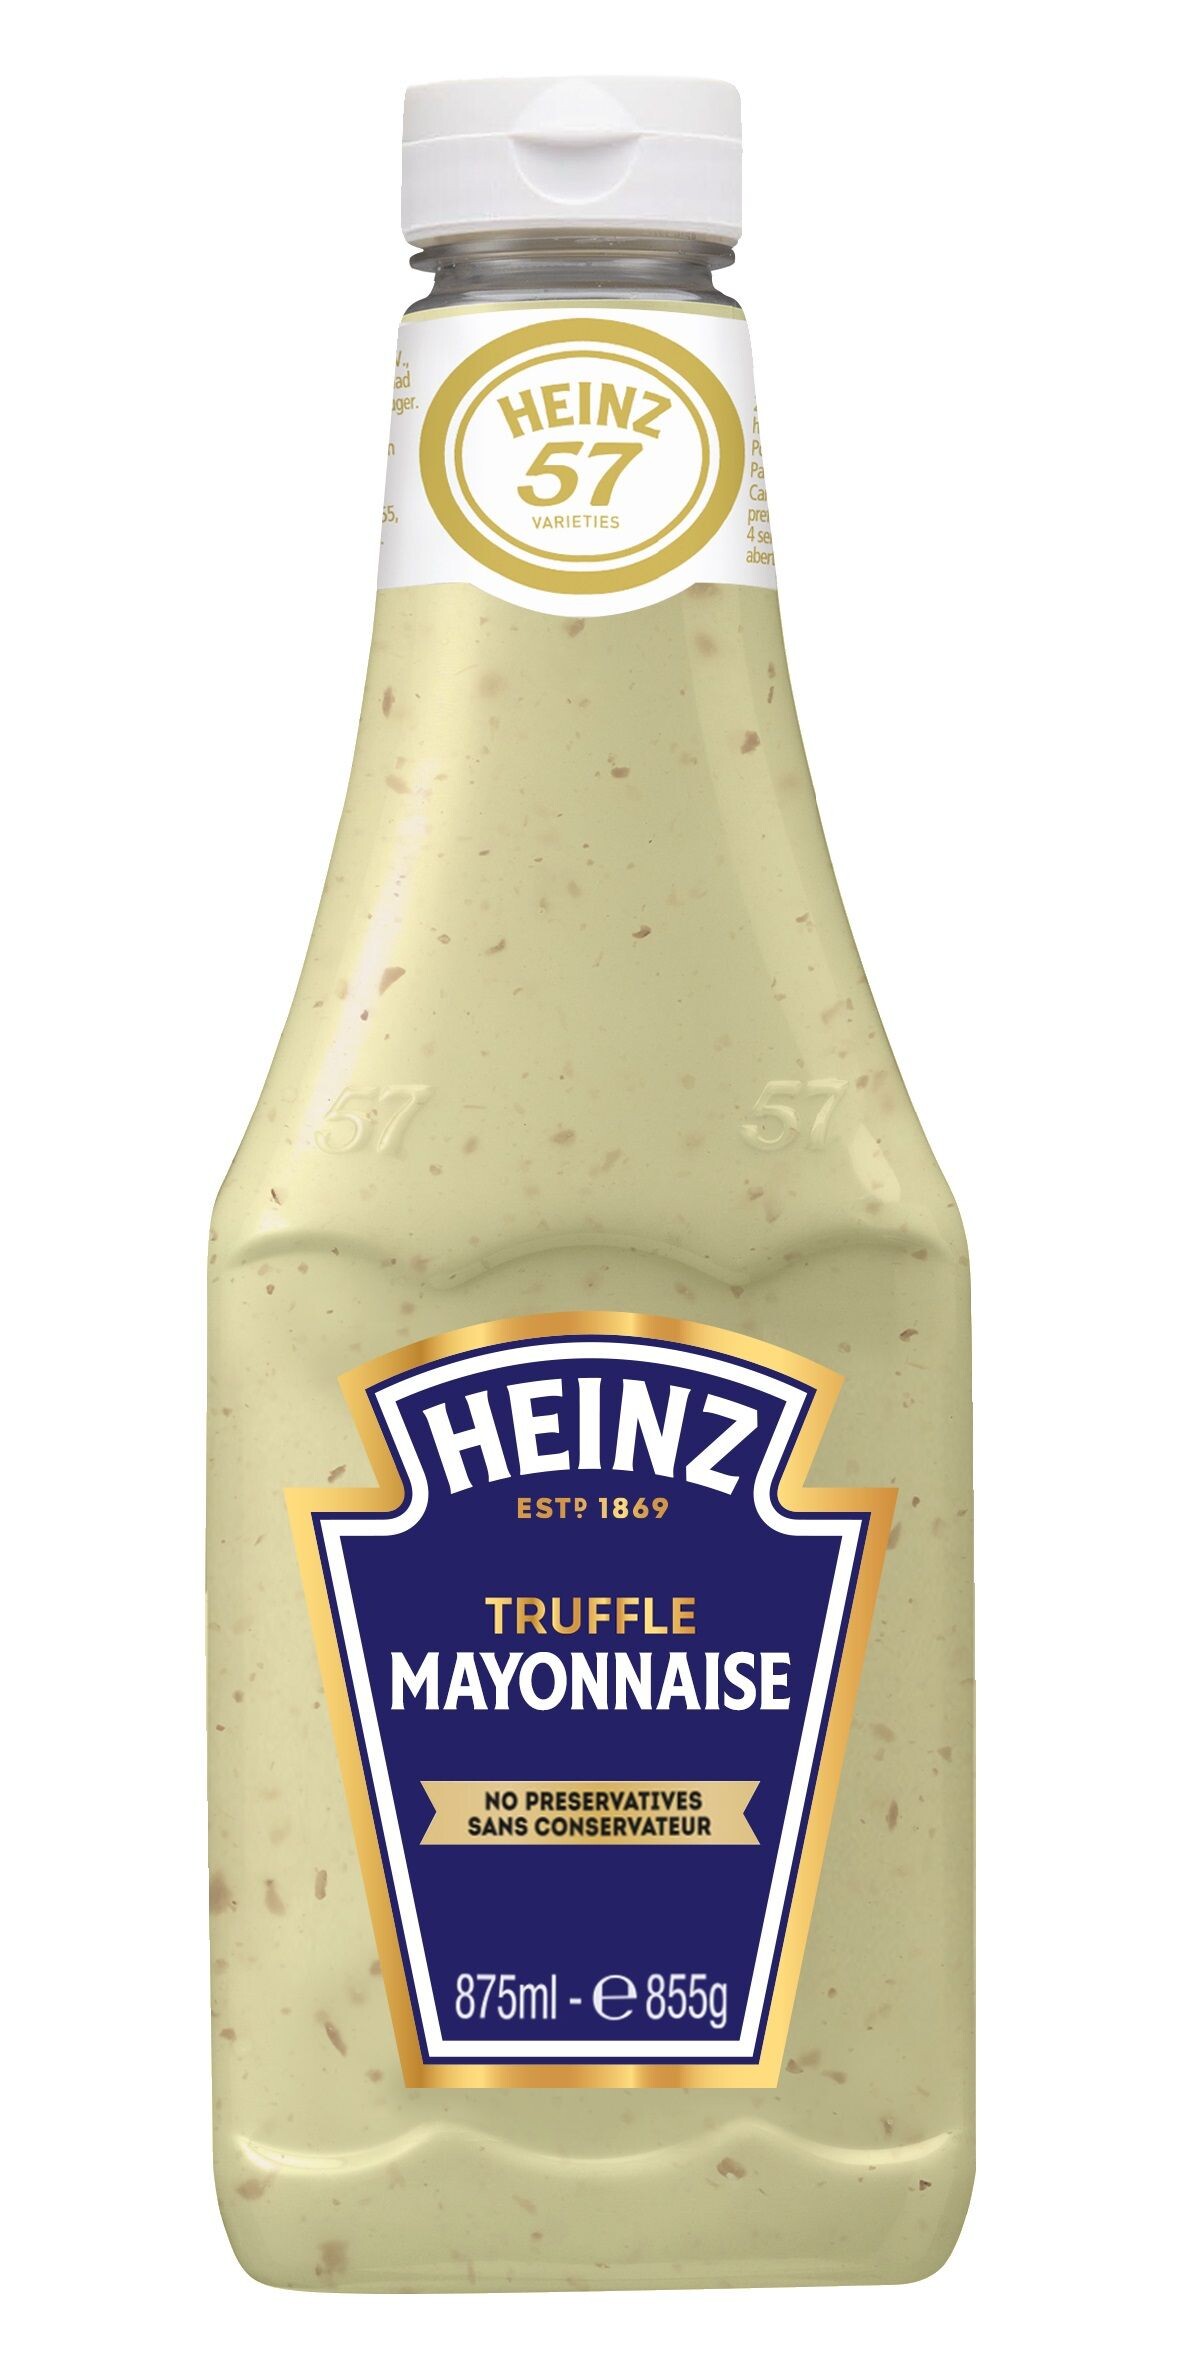 Heinz truffle mayonnaise 875ml squeezable bottle